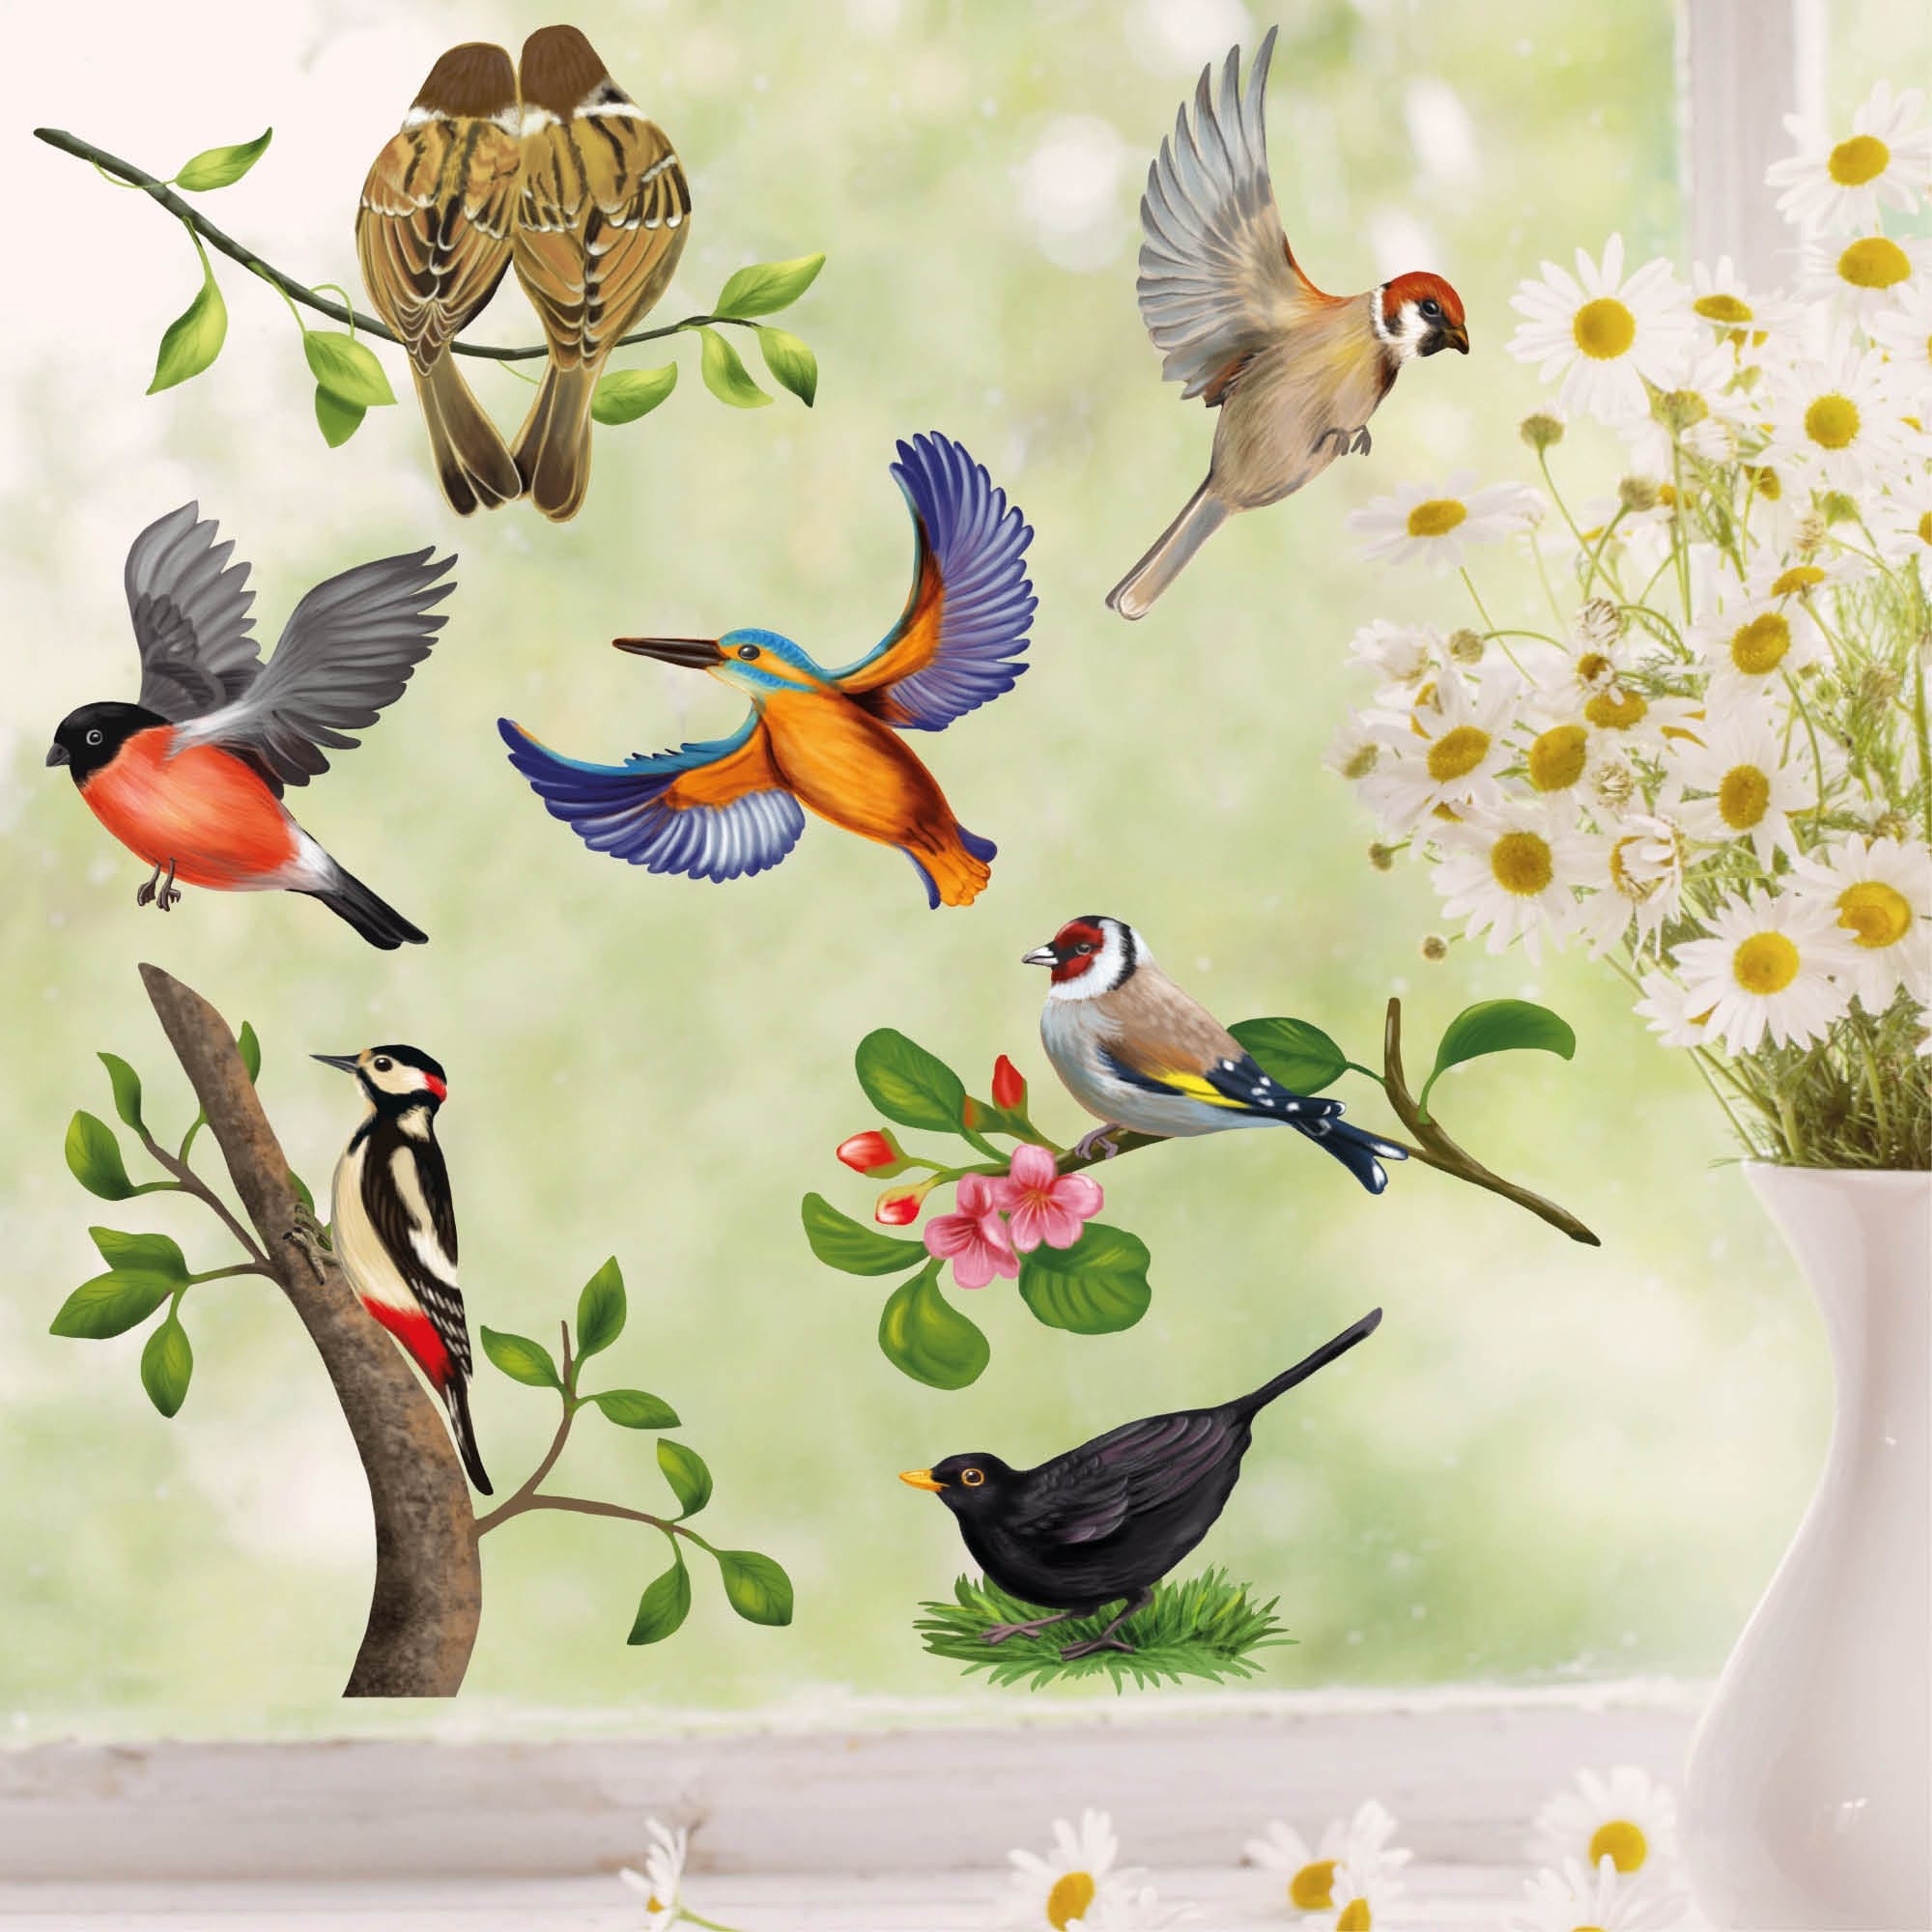 Fensterbild Frühling Vogel Vögel Vogelset bunt farbig wiederverwendbare Fensteraufkleber Kinderzimmer Baby Kind, Osterdeko, Frühlingsdeko